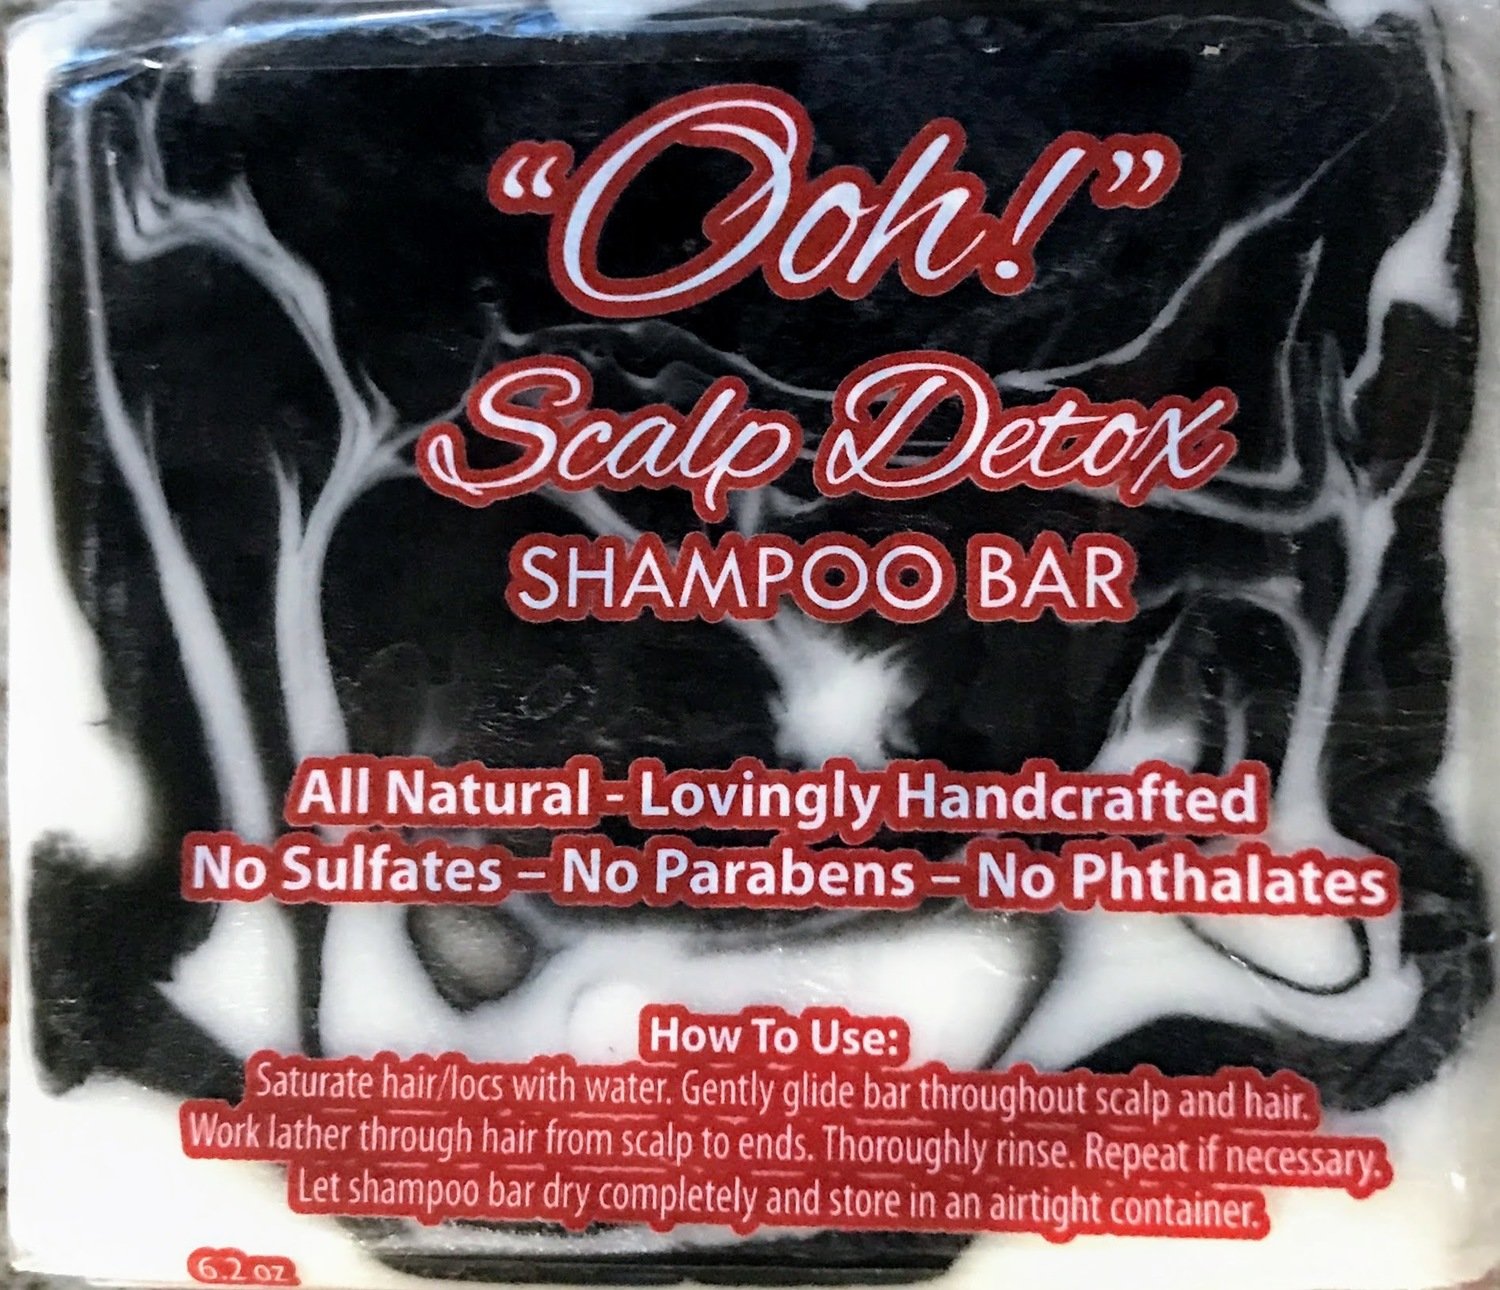 Shampoo Bar - "Ooh!" Scalp Detox